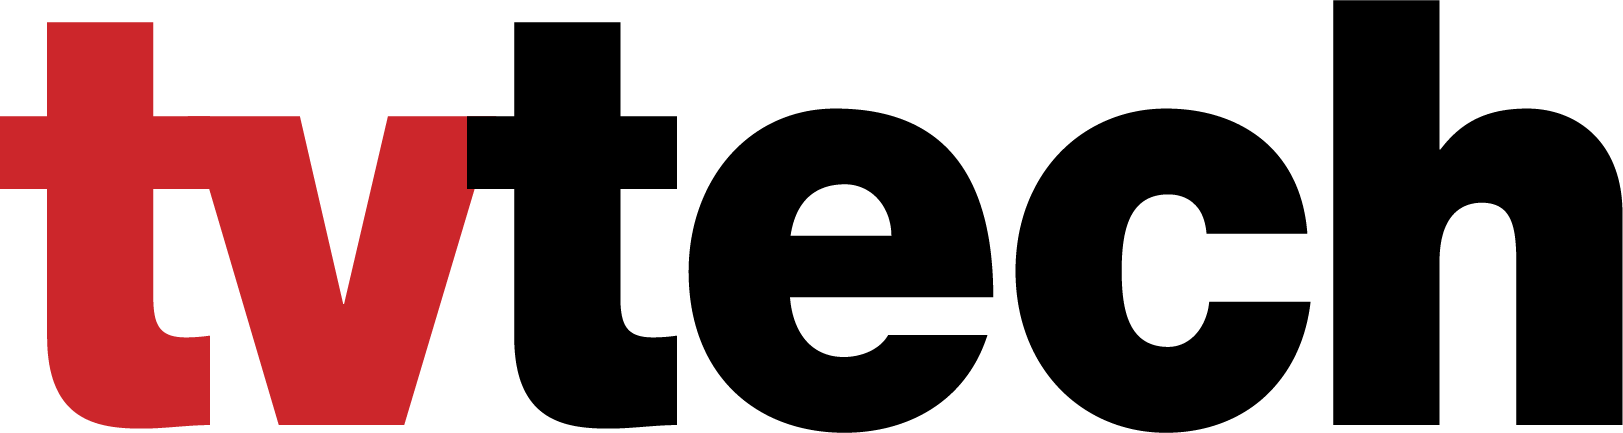 TVTech_logo